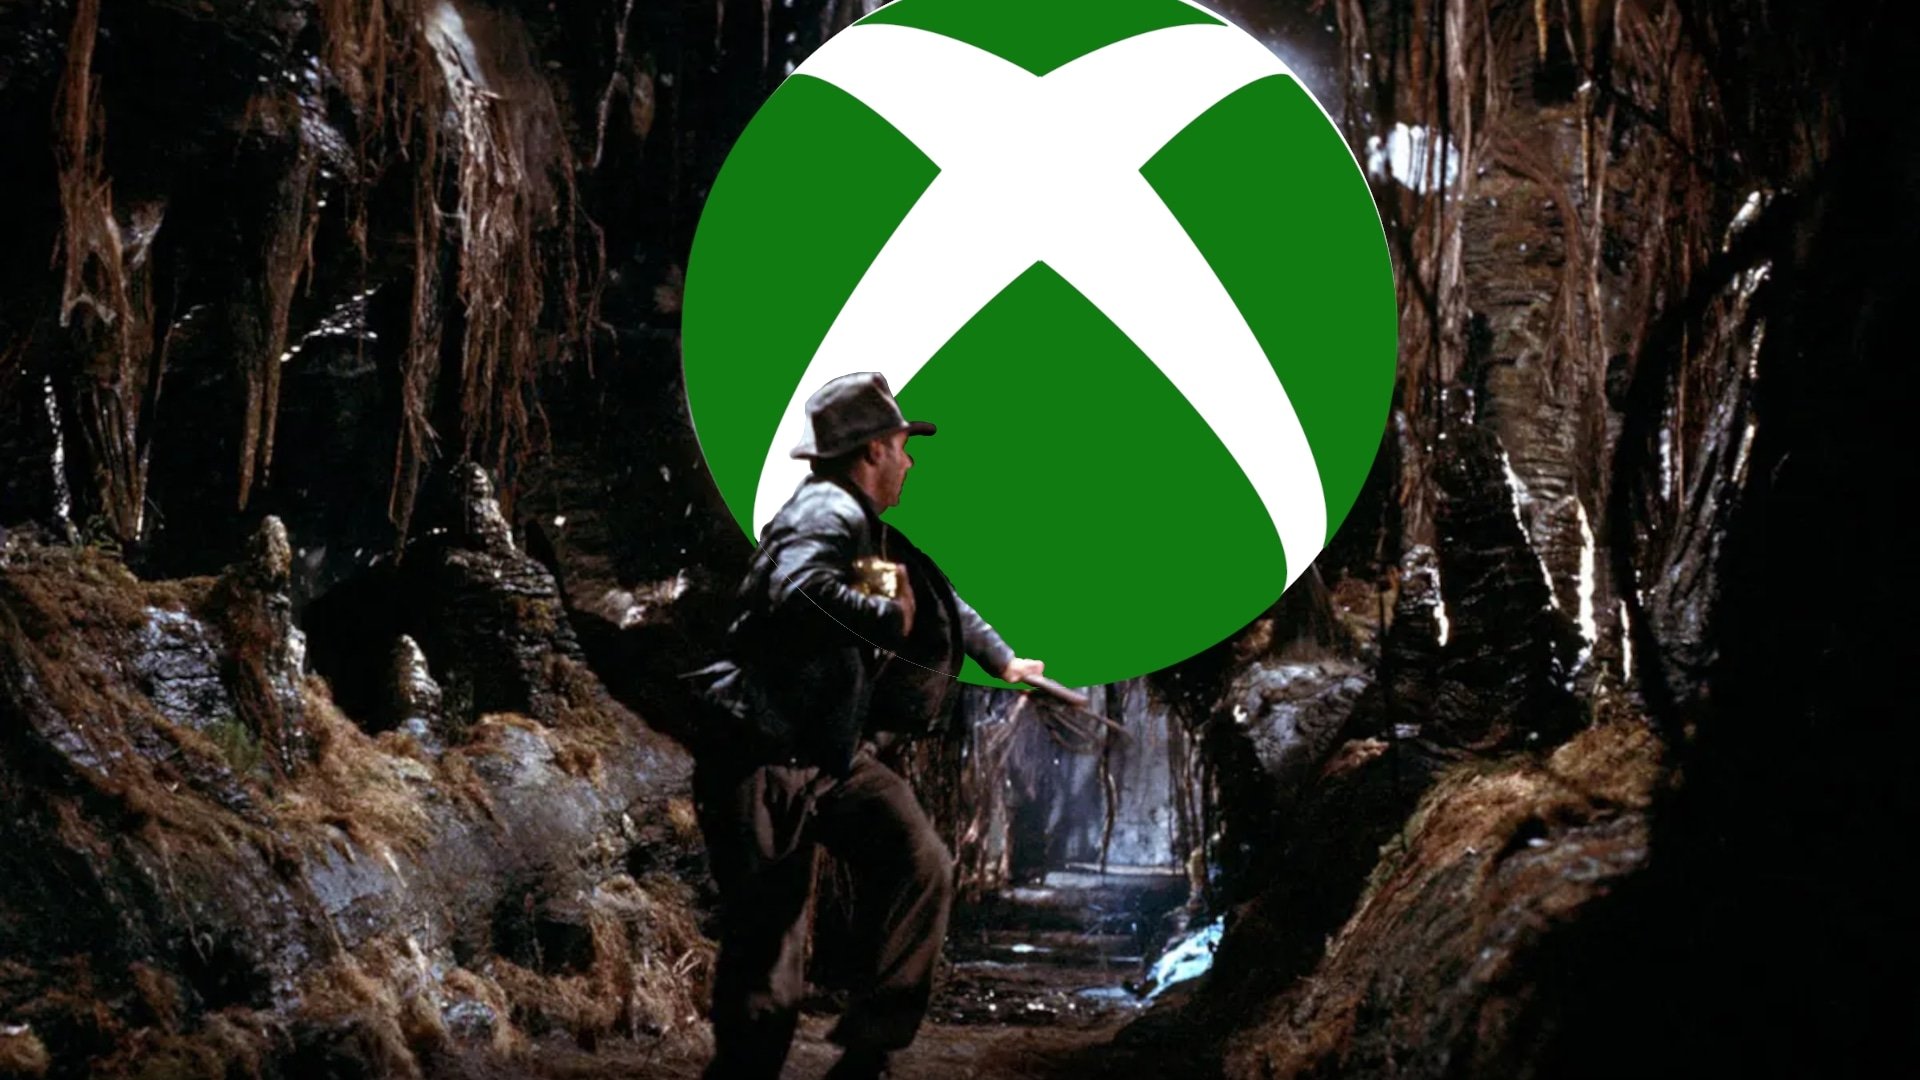 Indiana jones running from Xbox logo